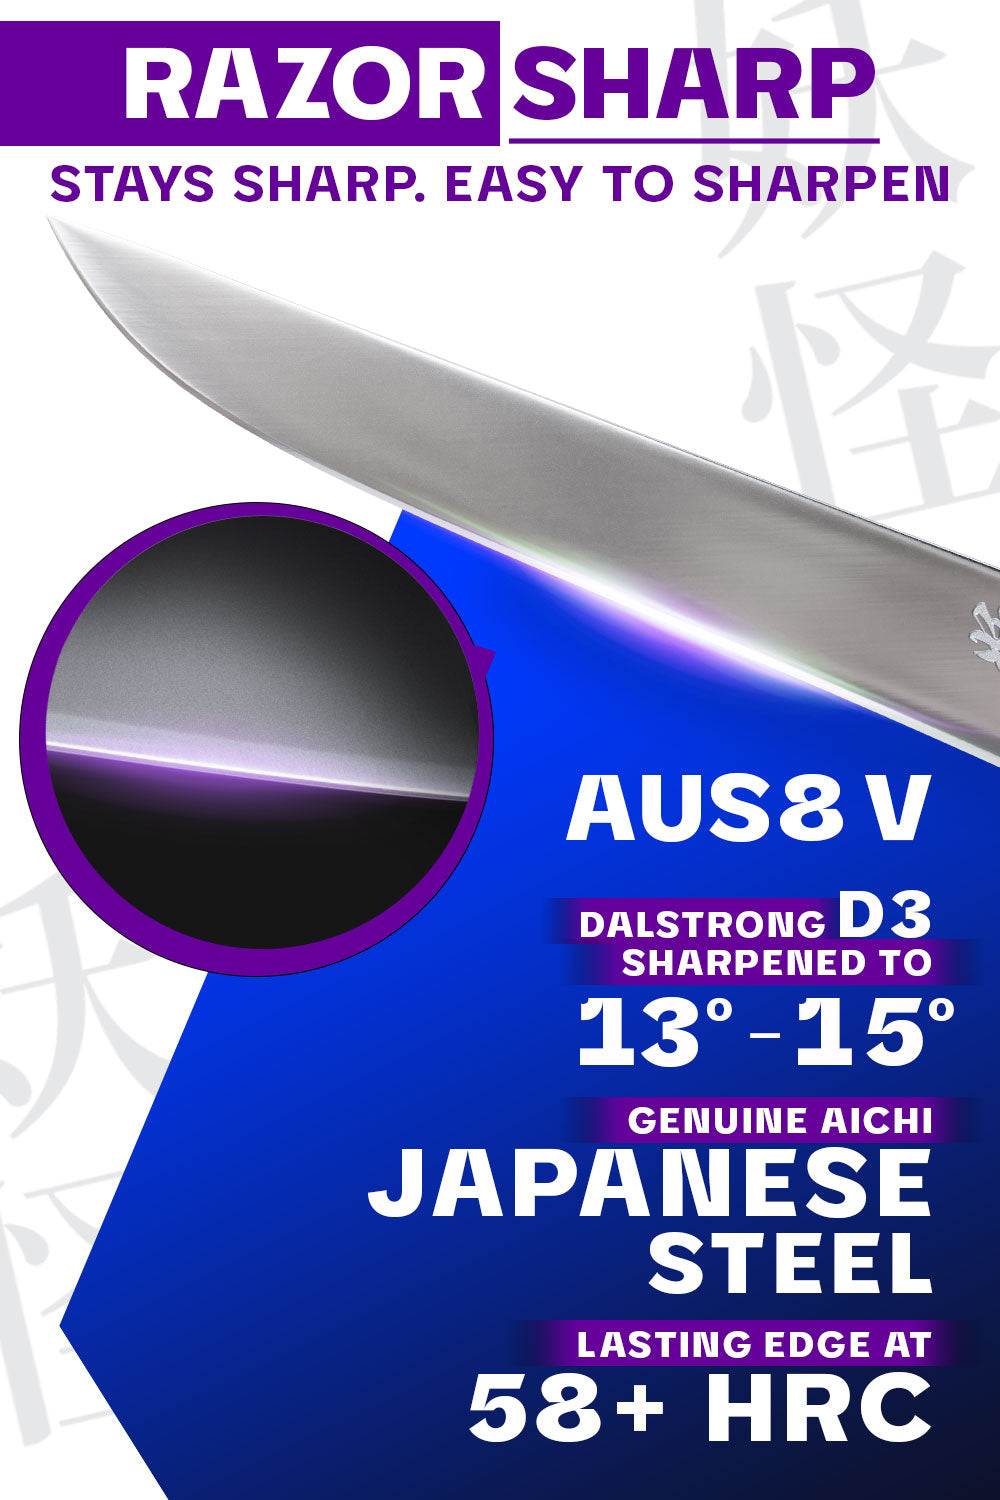 Dalstrong phantom series 6 inch boning knife with pakka wood handle featuring it's razor sharp japanese blade.